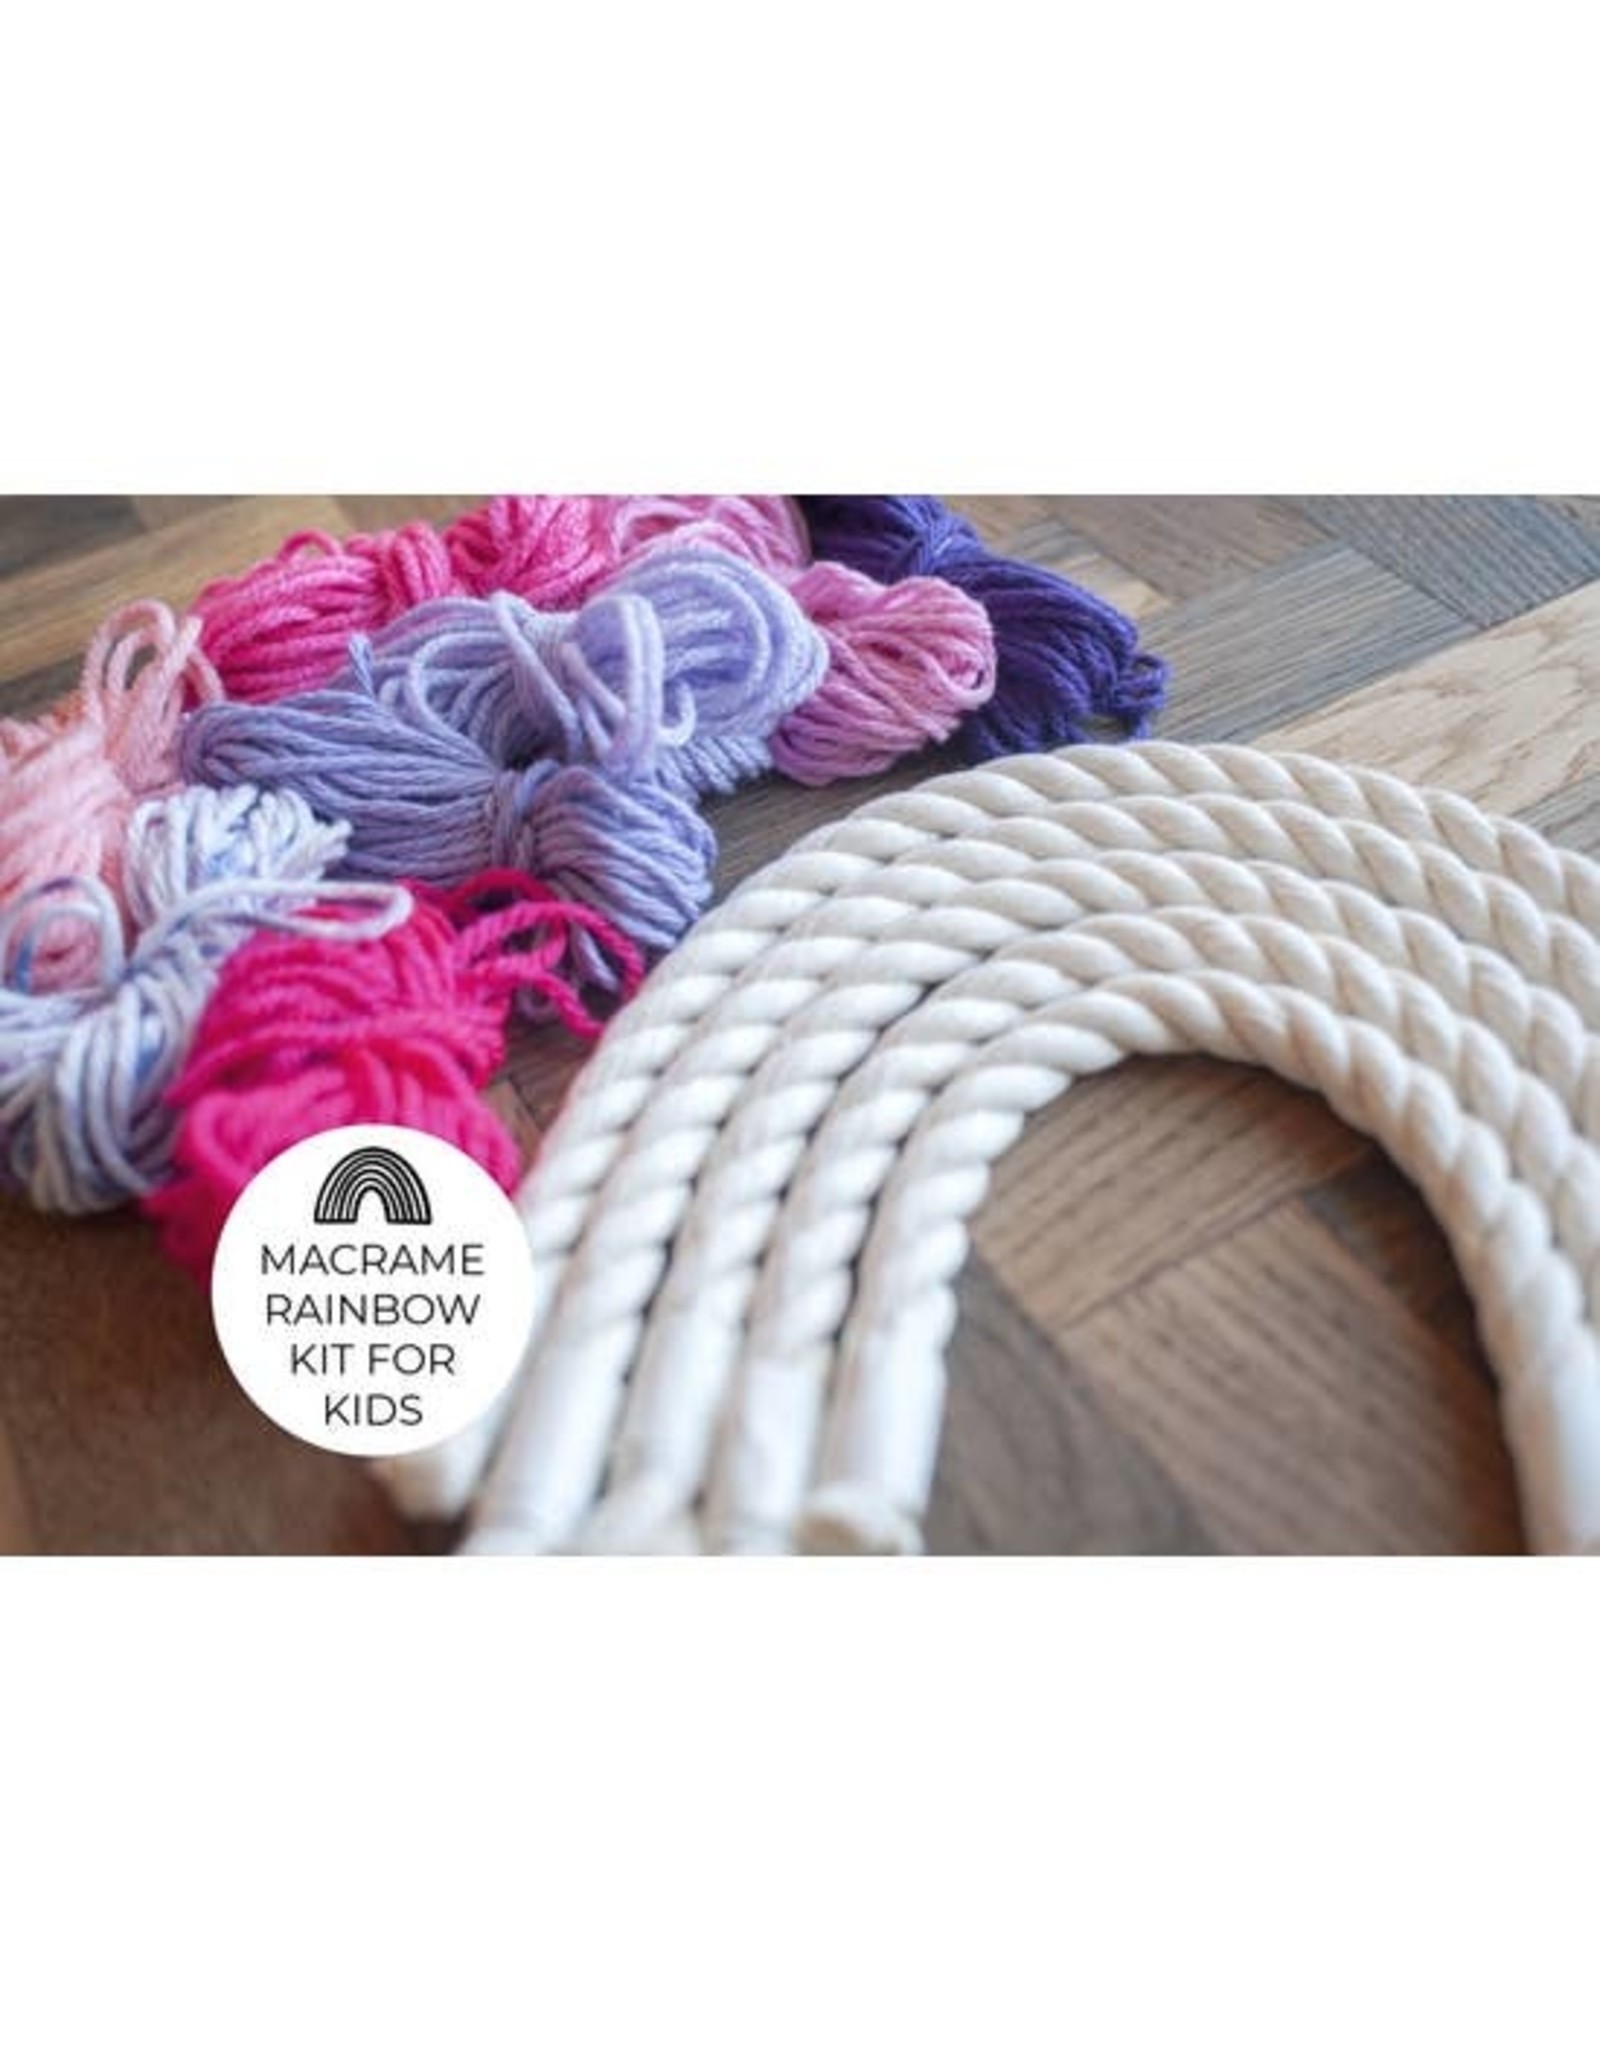 Hello Dear Heart Macrame Rainbow Kits for Kids: Pink & Purple